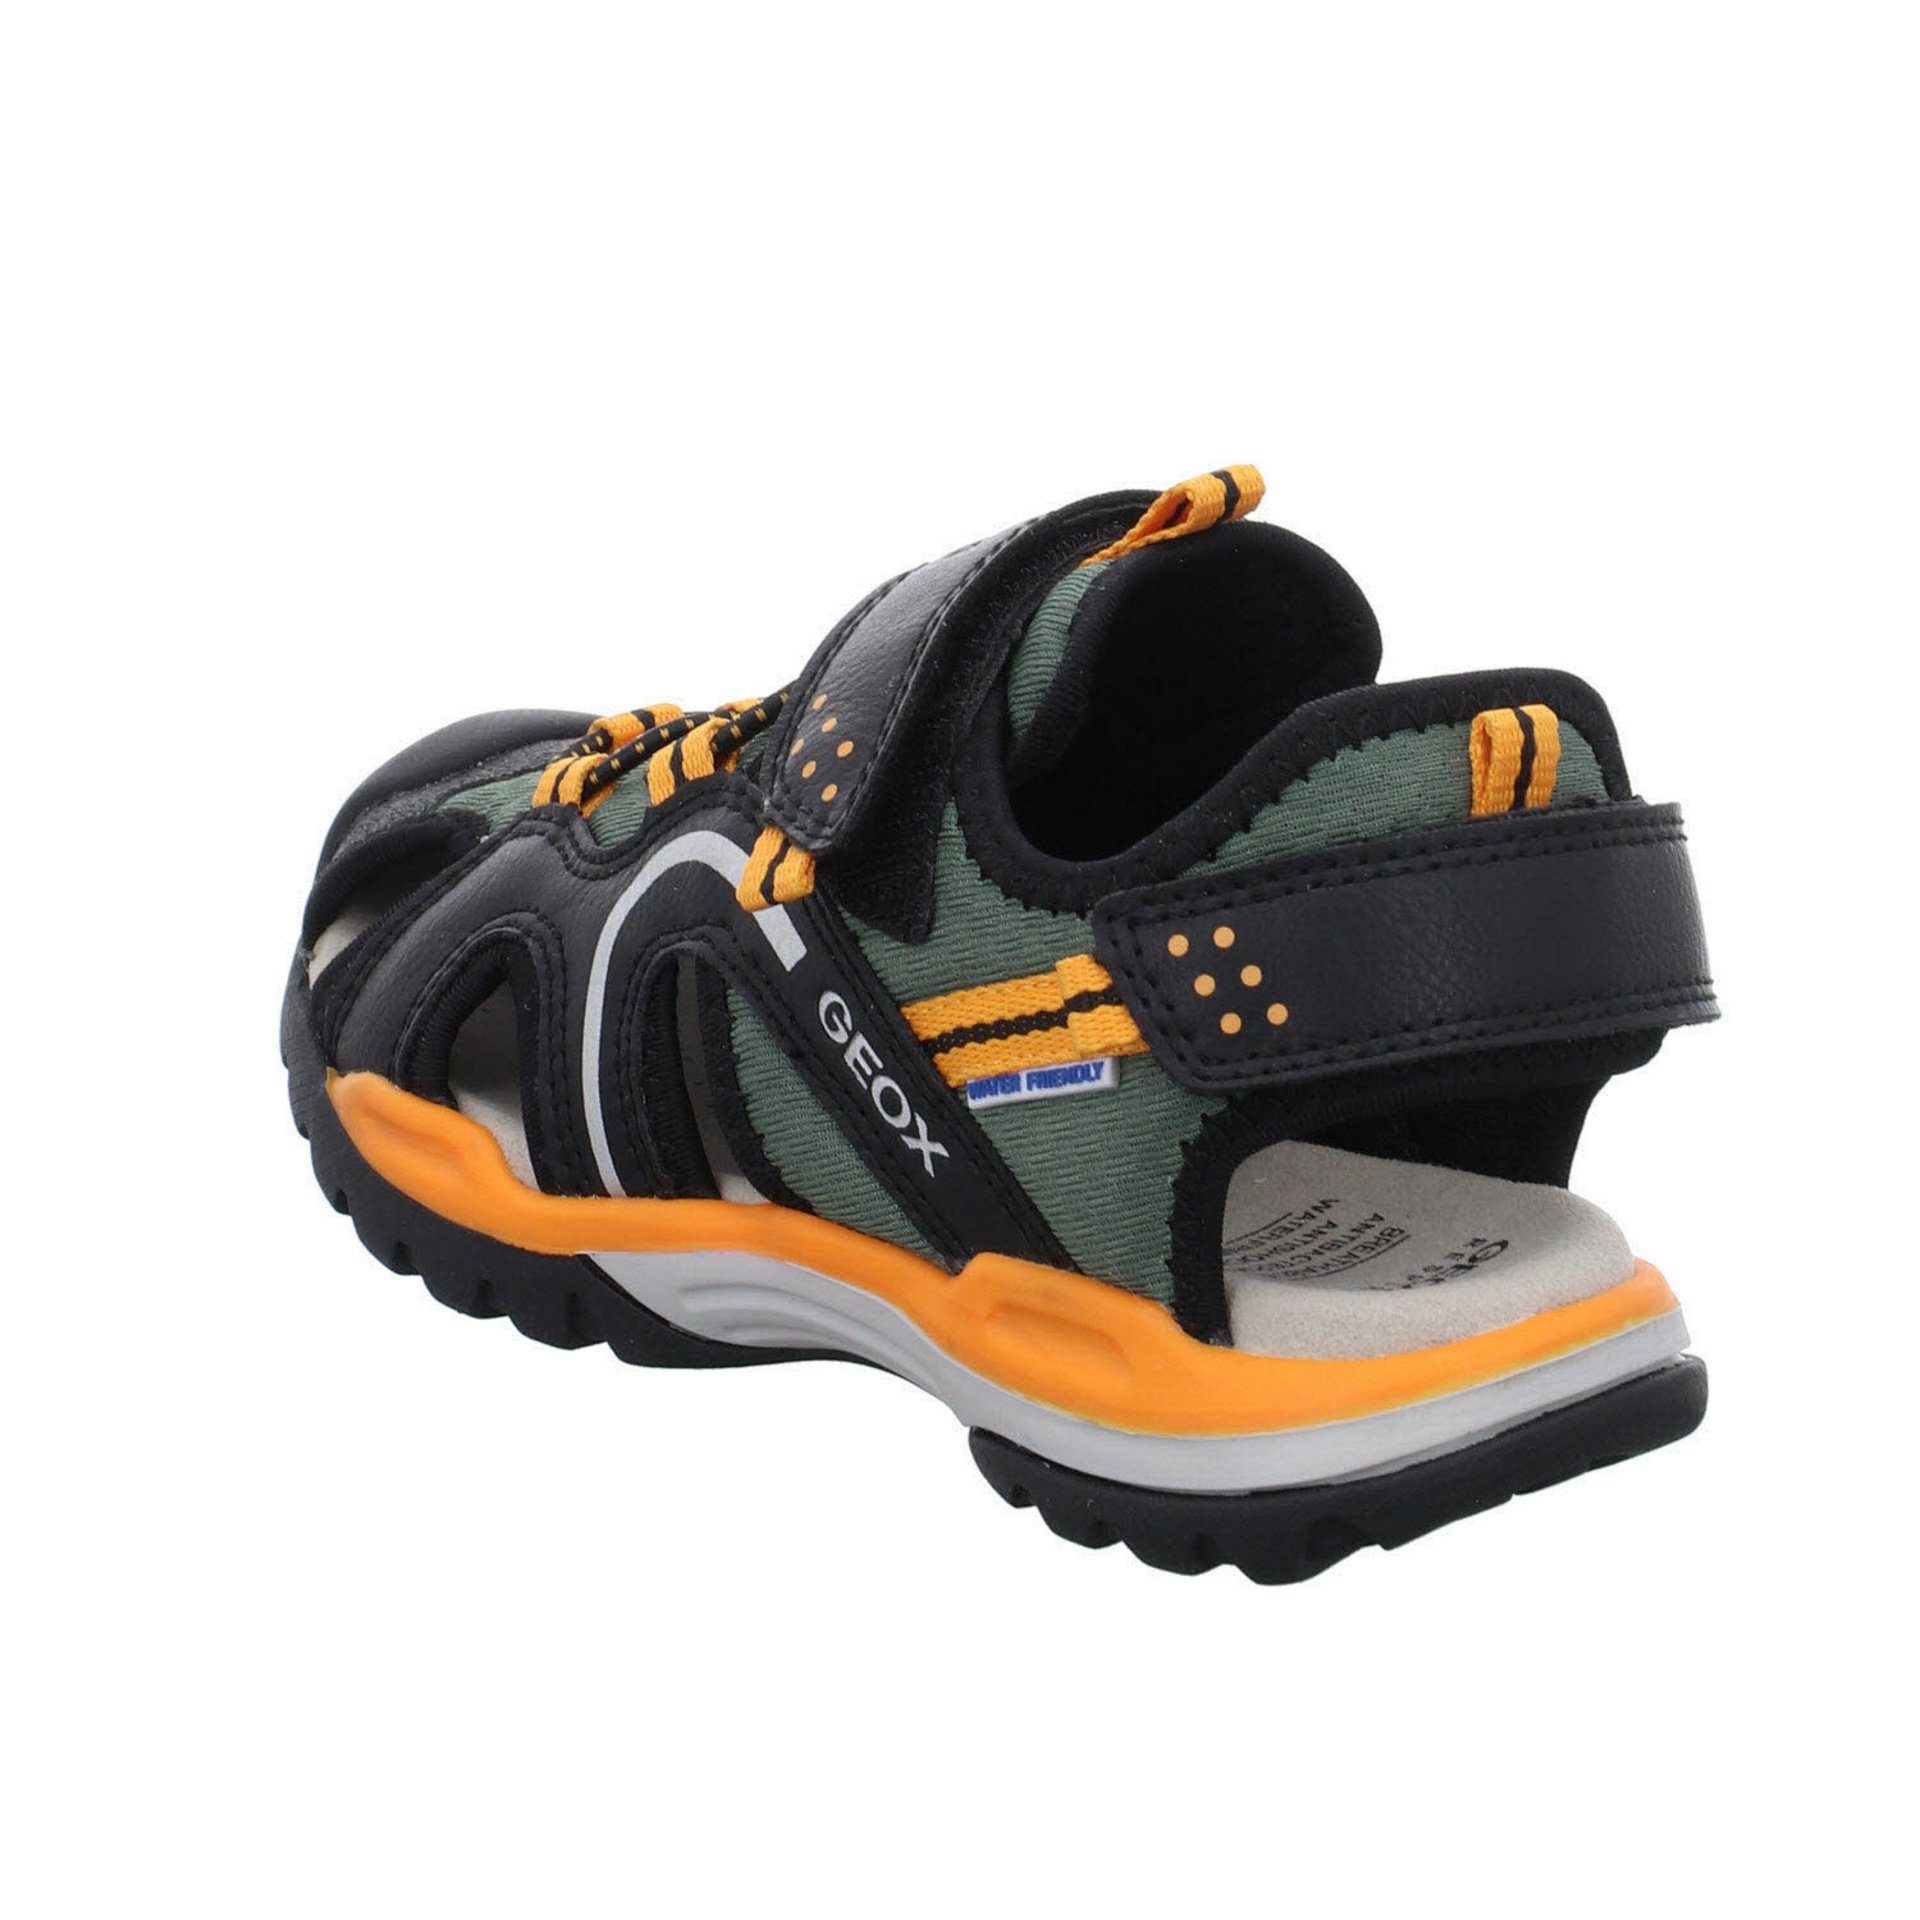 Orange Sandale Outdoorsandale Geox Borealis Synthetikkombination Sandalen Schuhe Schwarz Jungen